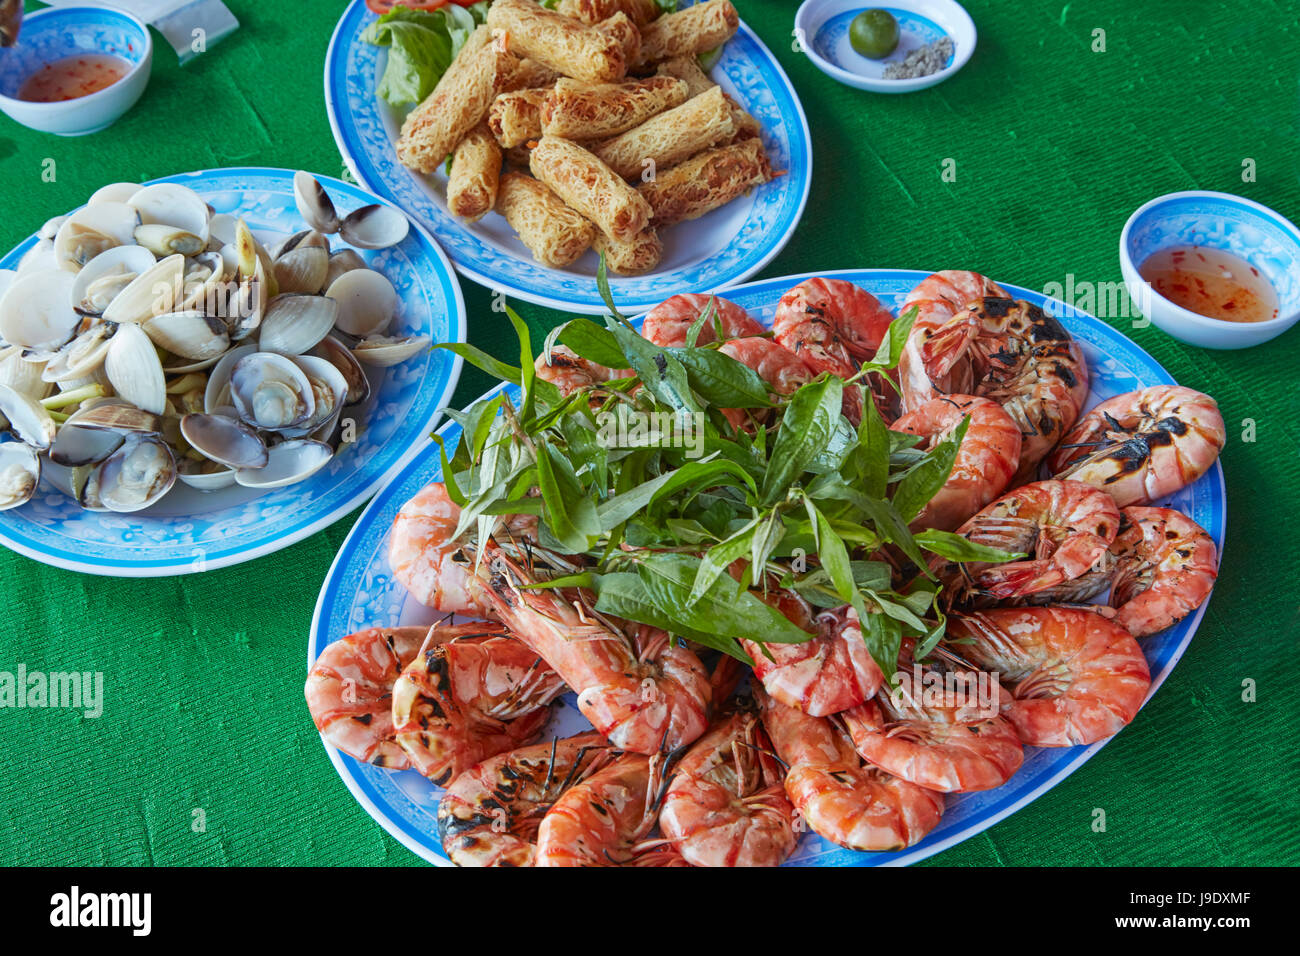 Des plats de fruits de mer au restaurant, Tan Thanh, province de Tien Giang, Delta du Mekong, Vietnam Banque D'Images